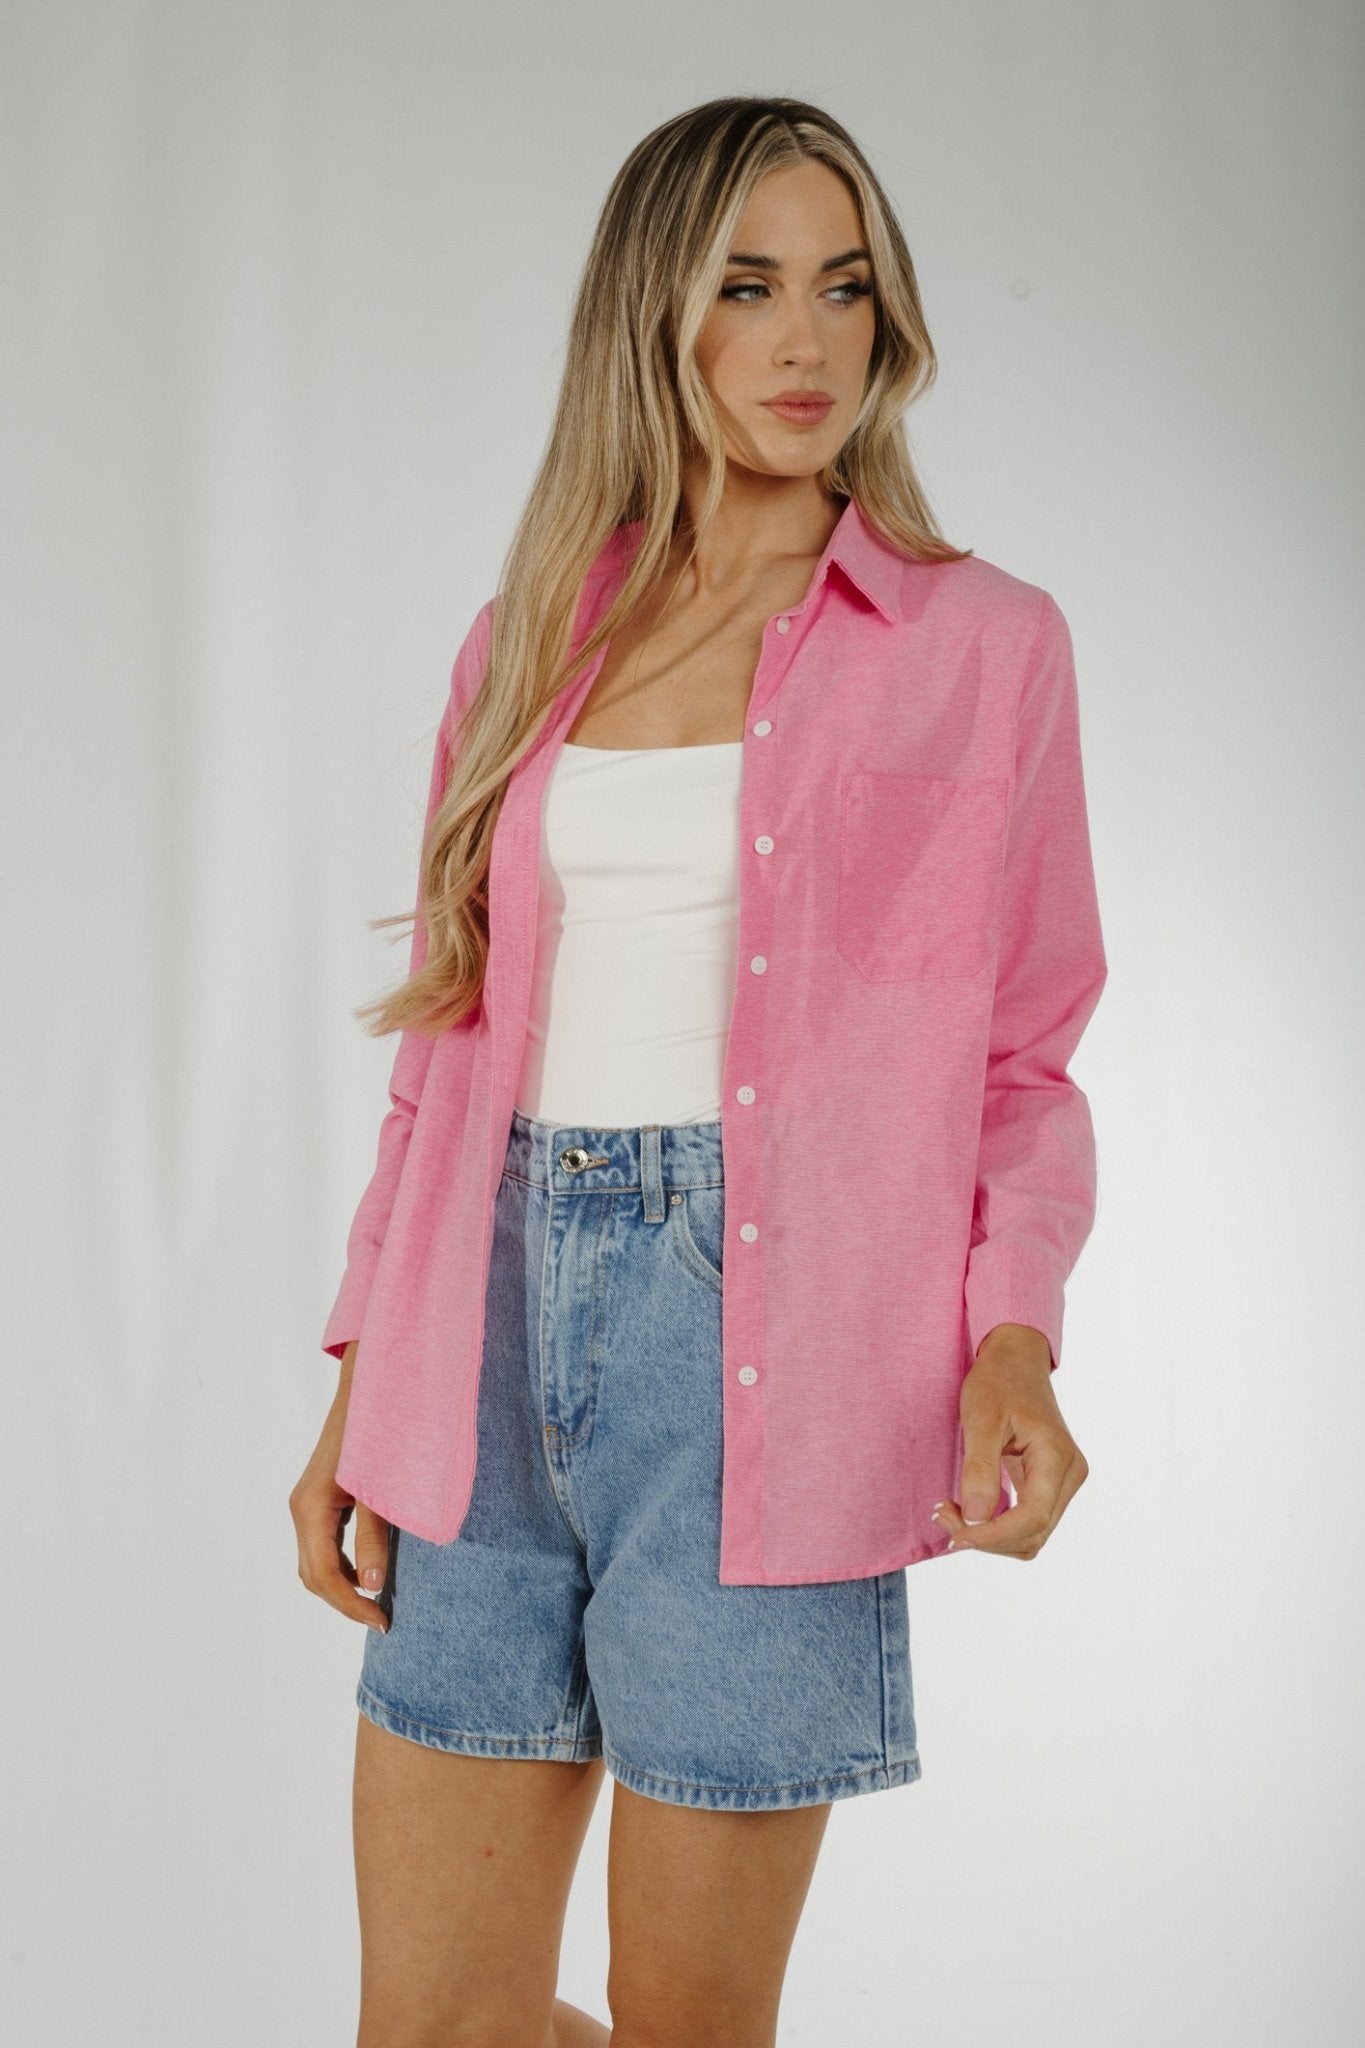 Kendra Shirt In Pink - The Walk in Wardrobe